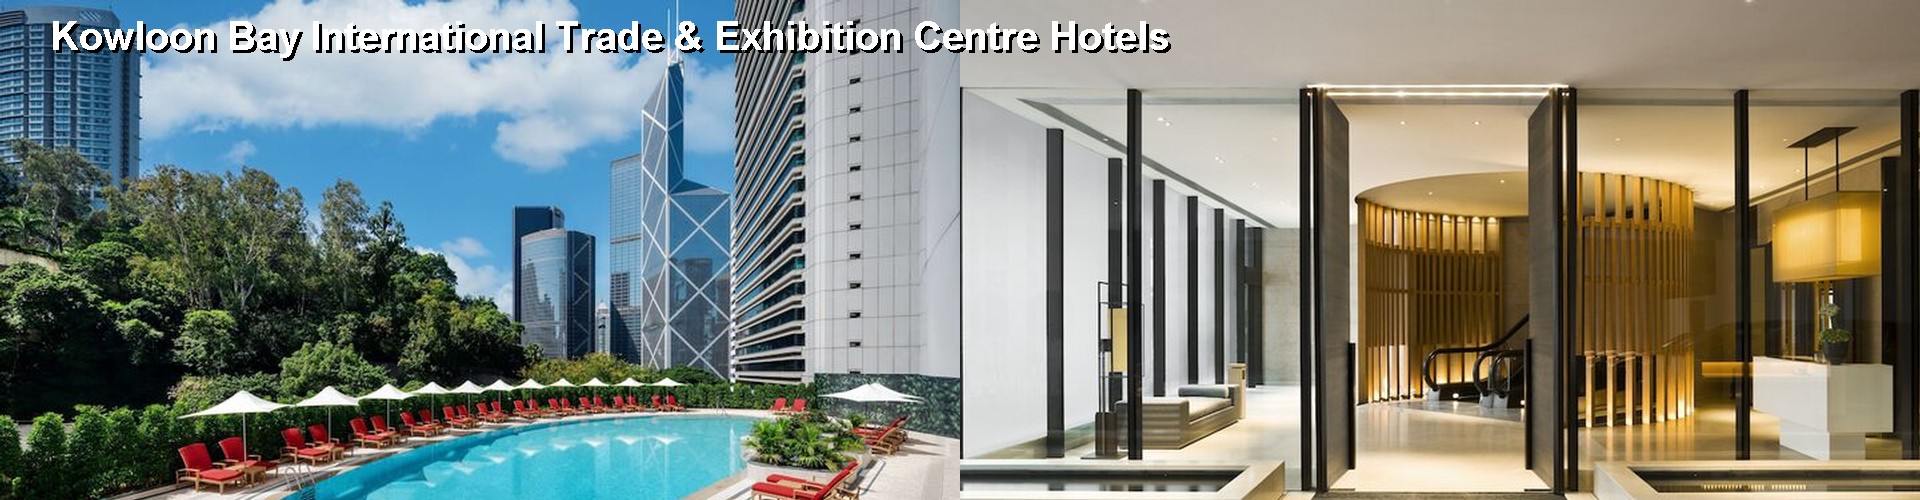 5 Best Hotels near Kowloon Bay International Trade & Exhibition Centre